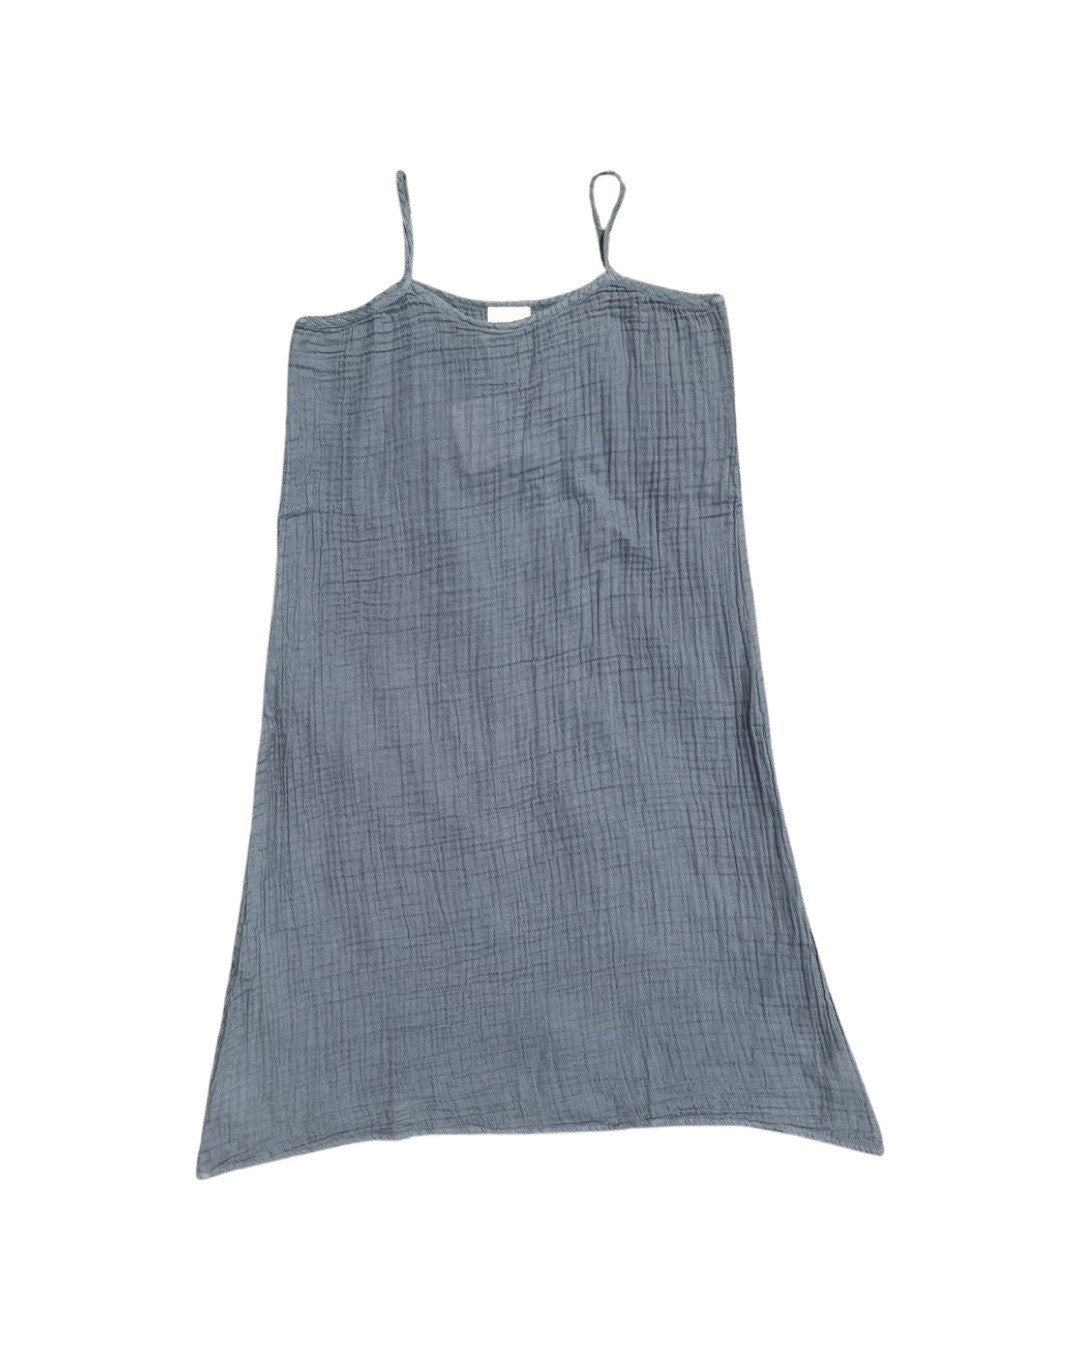 CHARCOAL LONG COTTON SLIP DRESS - Kingfisher Road - Online Boutique